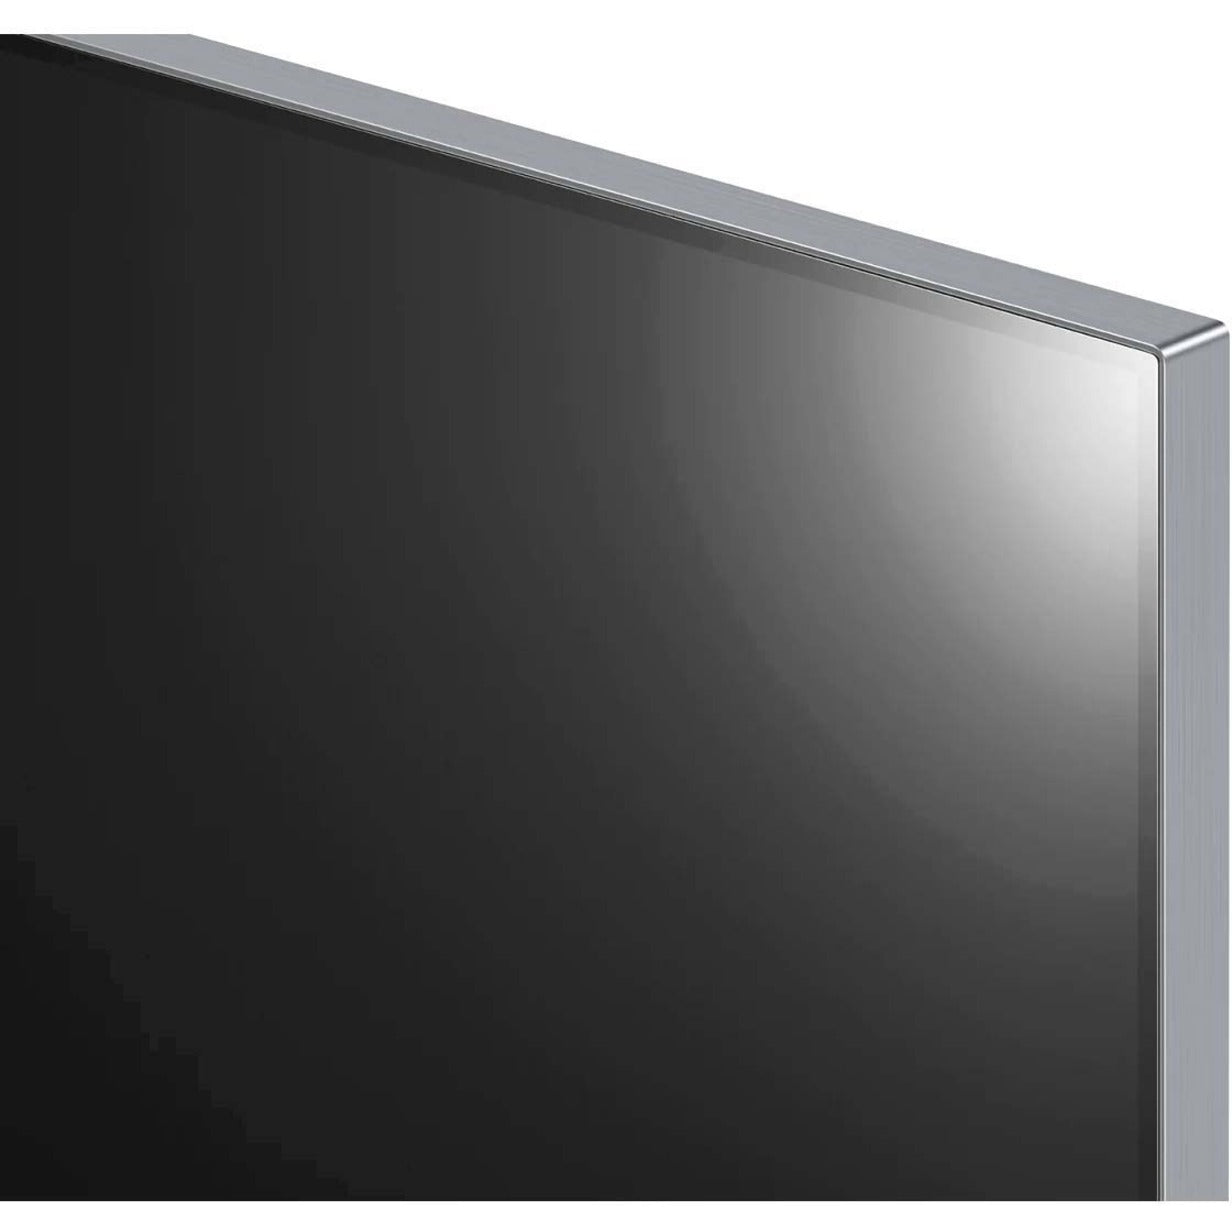 LG evo G2 OLED83G2PSA 83" Smart OLED TV - 4K UHDTV